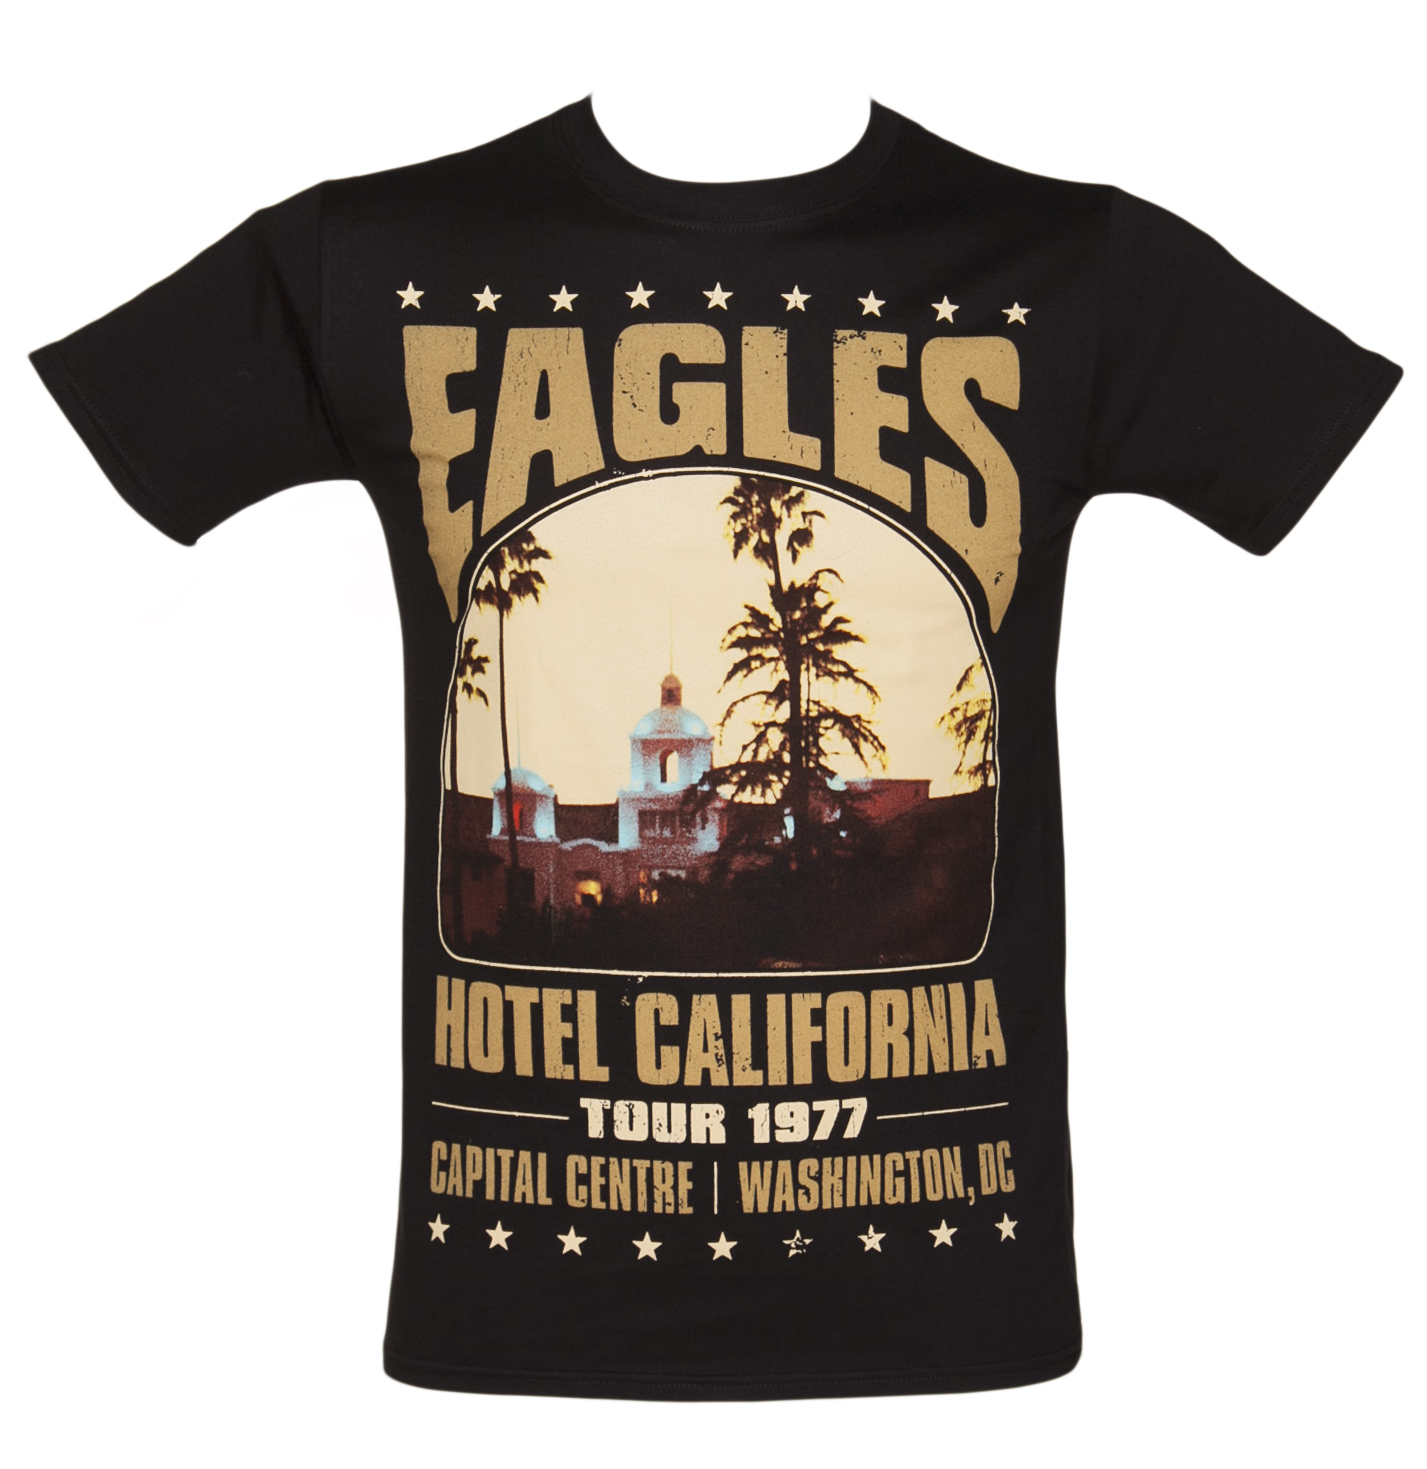 Mens Hotel California Tour The Eagles T-Shirt